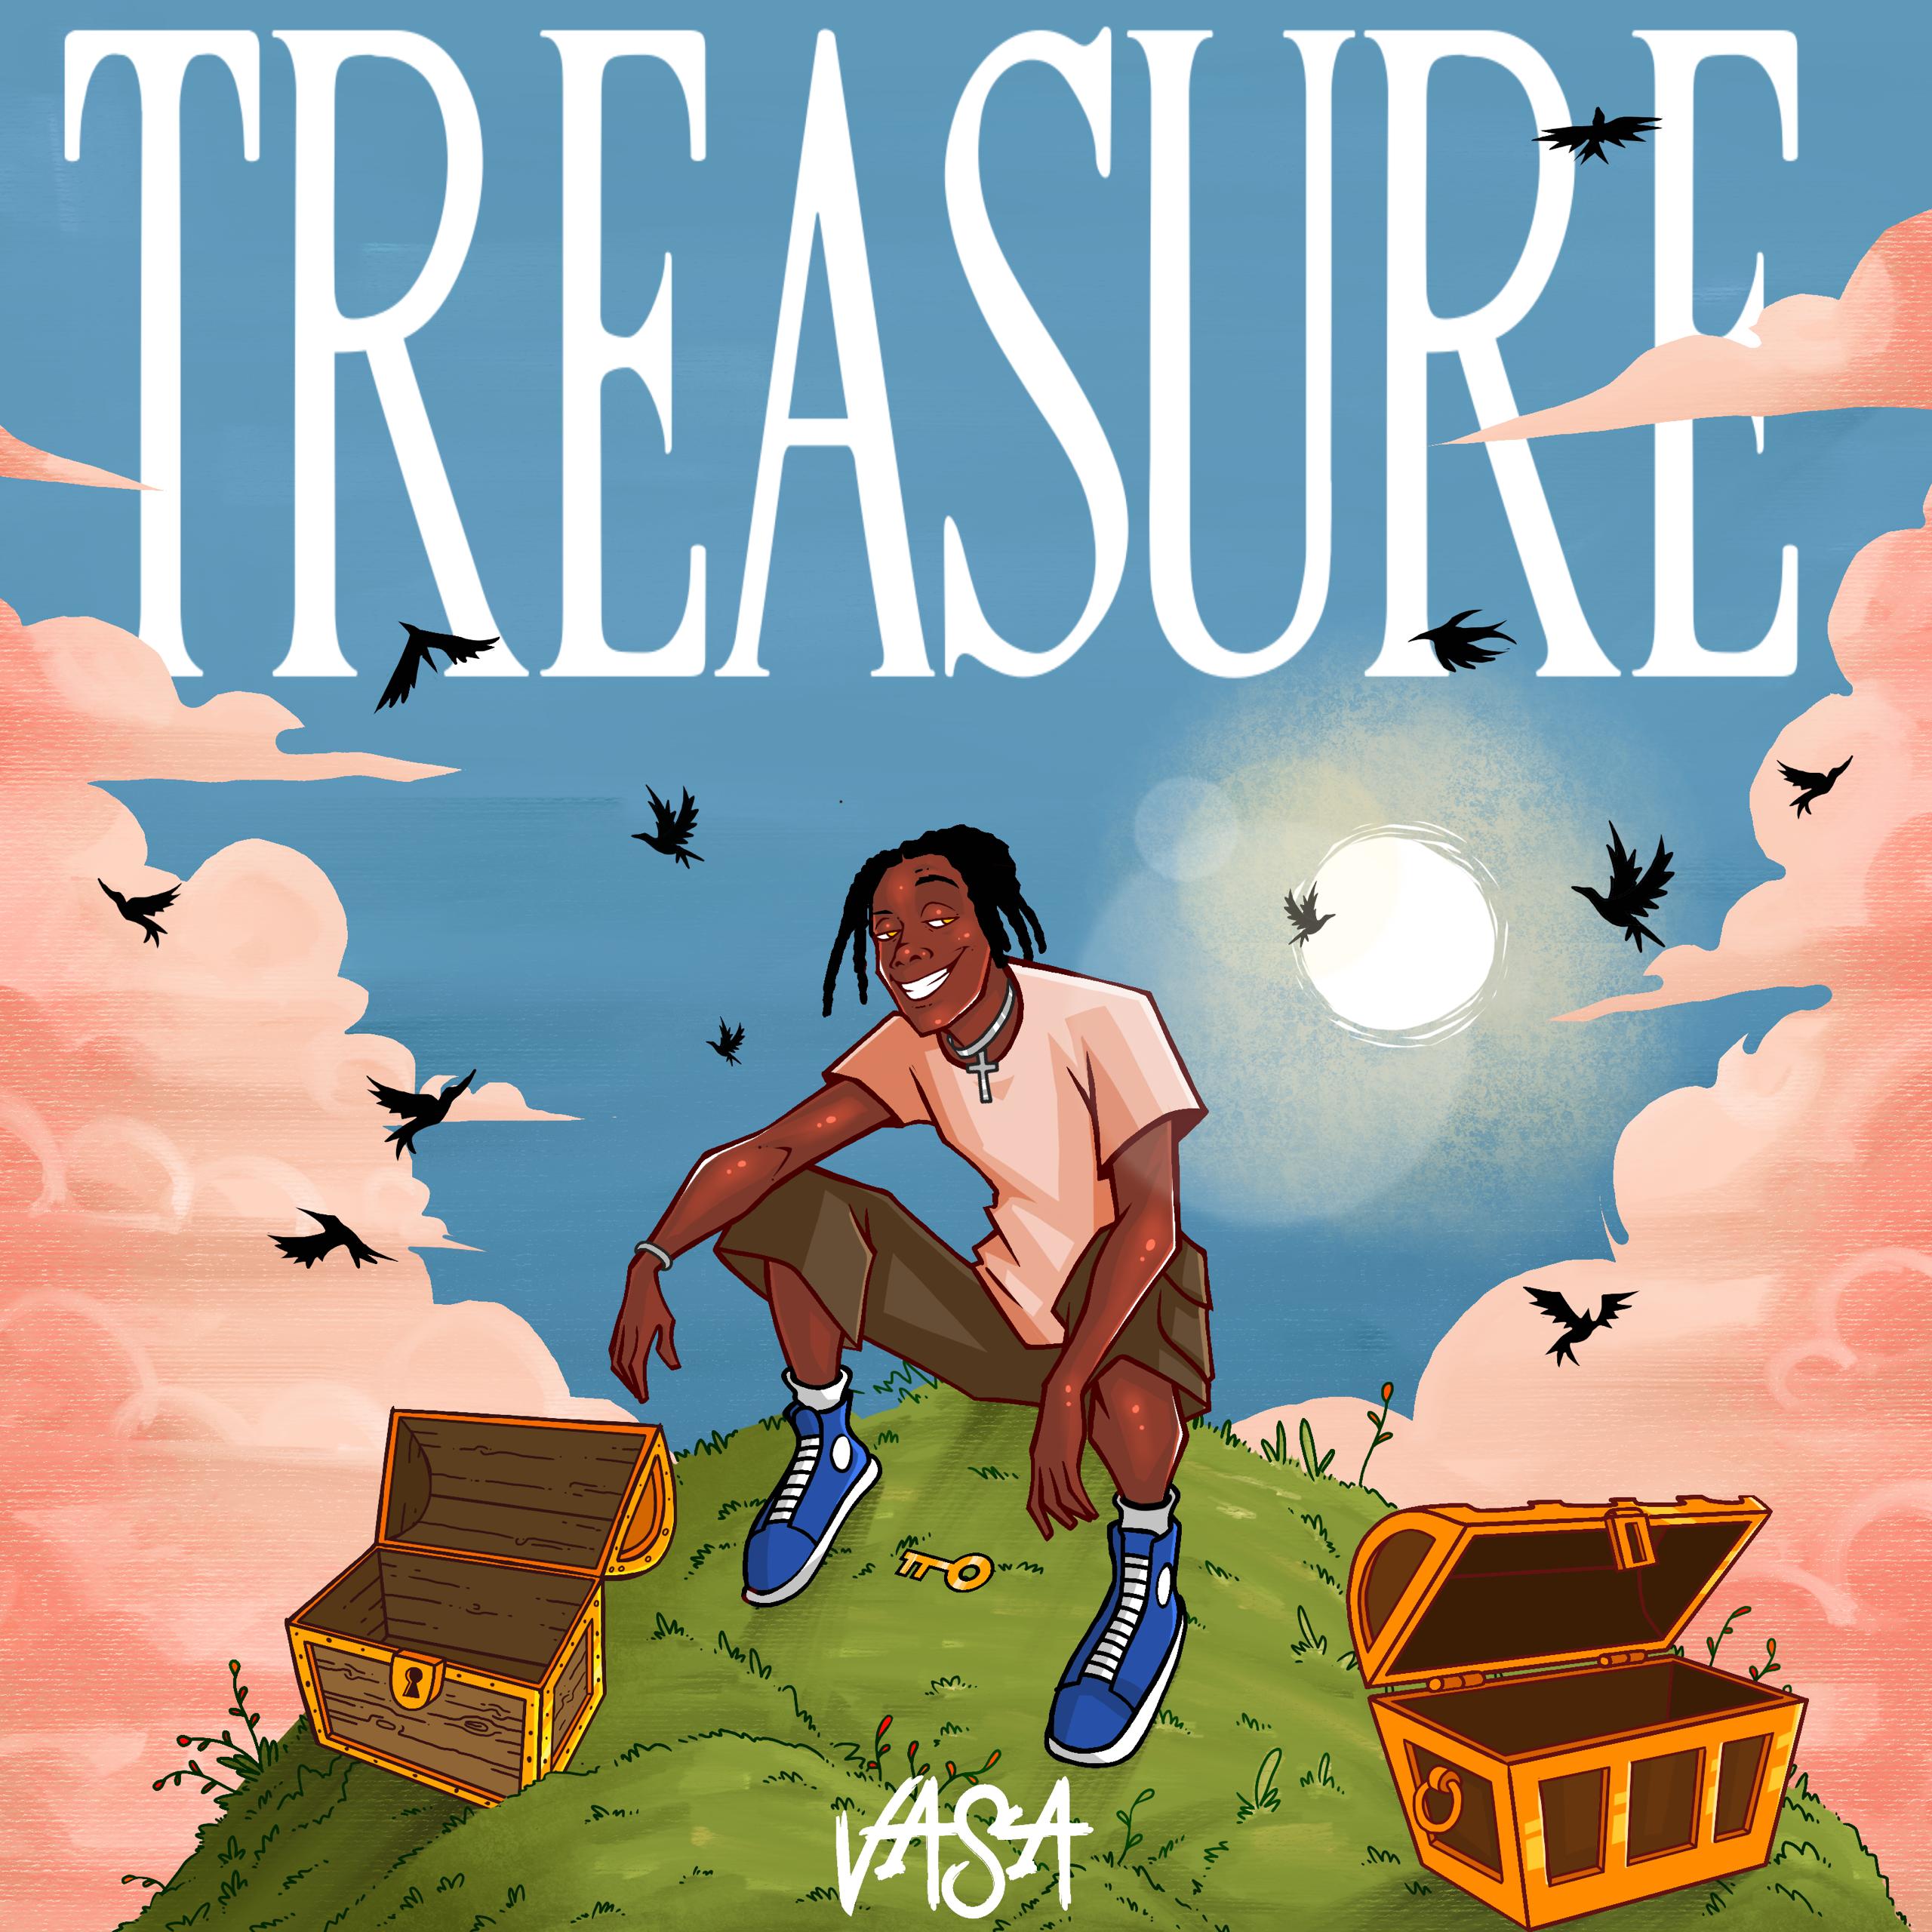 VASA’s ‘Treasure’: Your Passport To A Love Adventure!